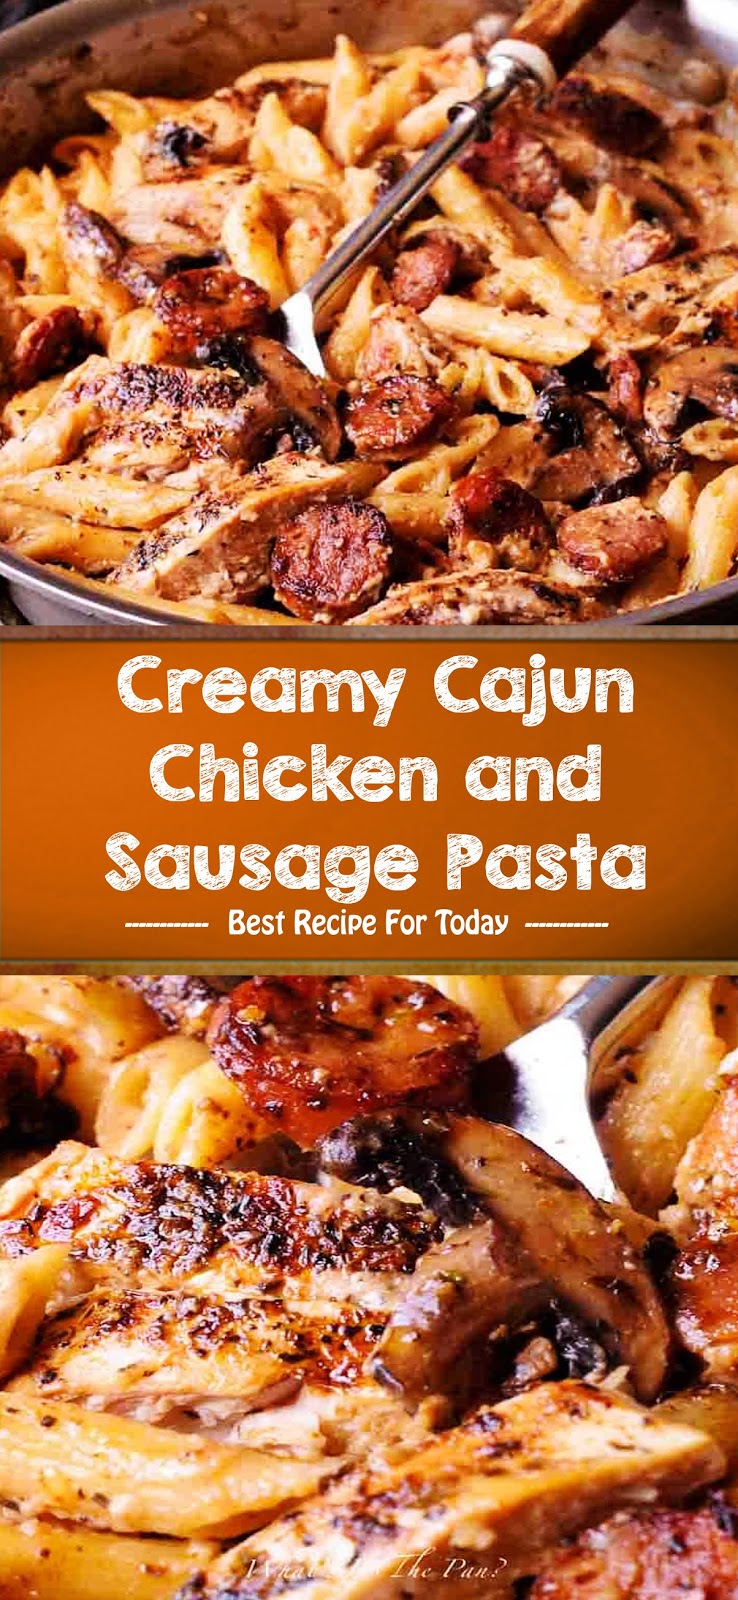 Creamy Cajun Chicken and Sausage Pasta